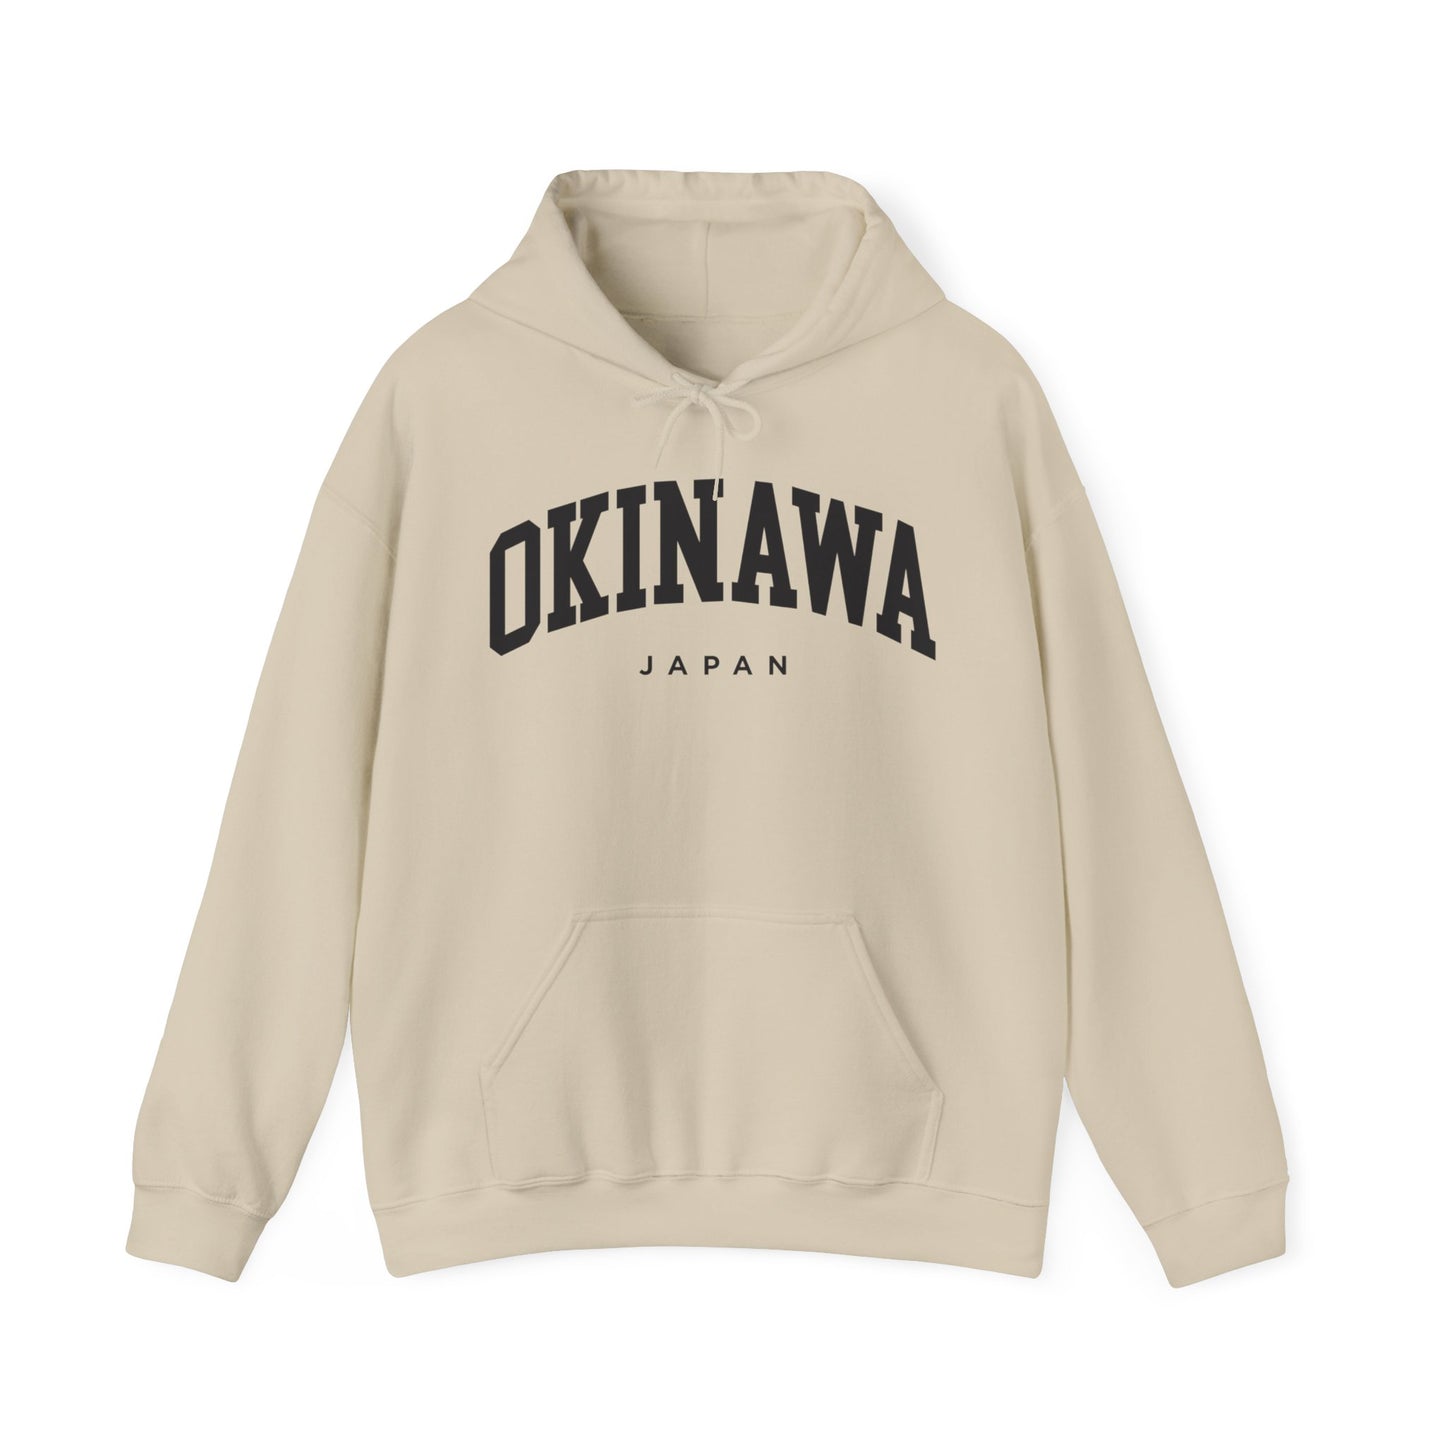 Okinawa Japan Hoodie